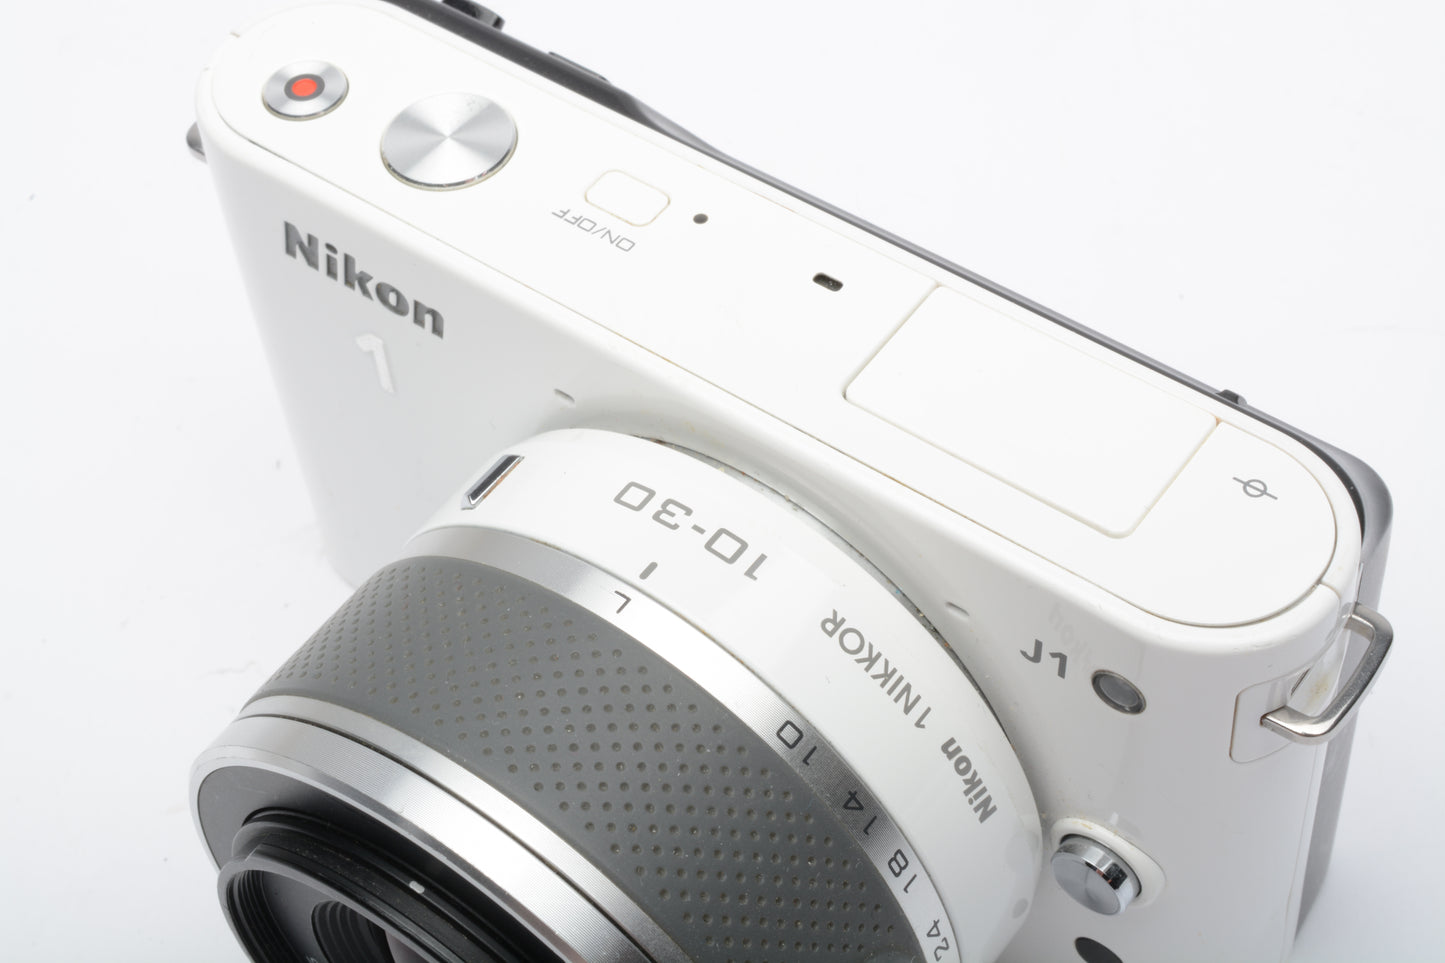 Nikon J1 (white) w/10-30 & 30-110mm 2-lens kit, case, strap, manual, tested, boxed